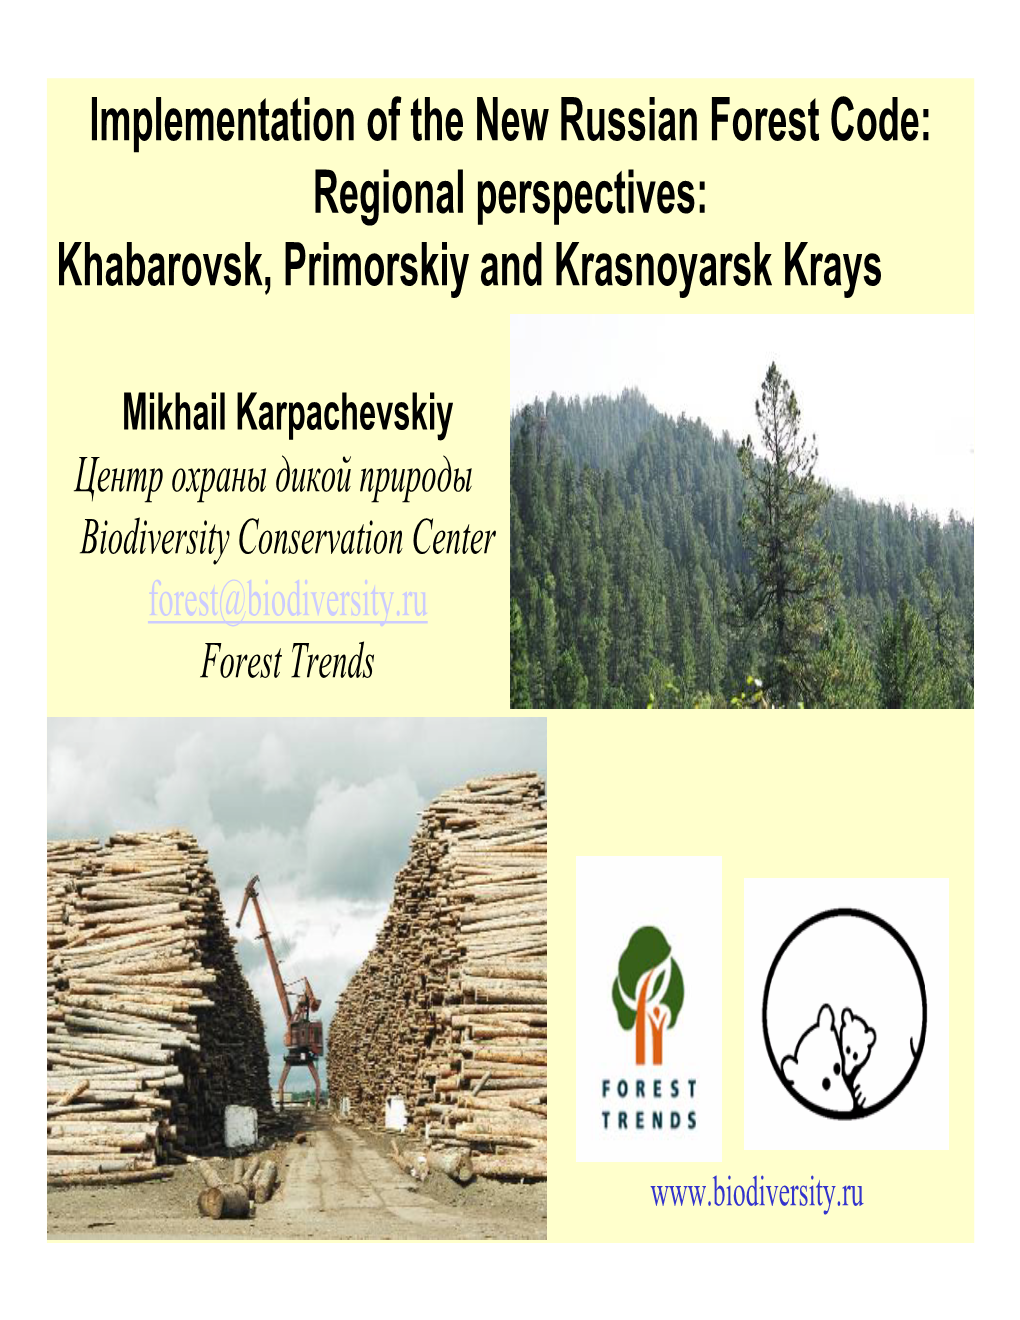 Implementation of the New Russian Forest Code: Regional Perspectives: Khabarovsk, Primorskiy and Krasnoyarsk Krays